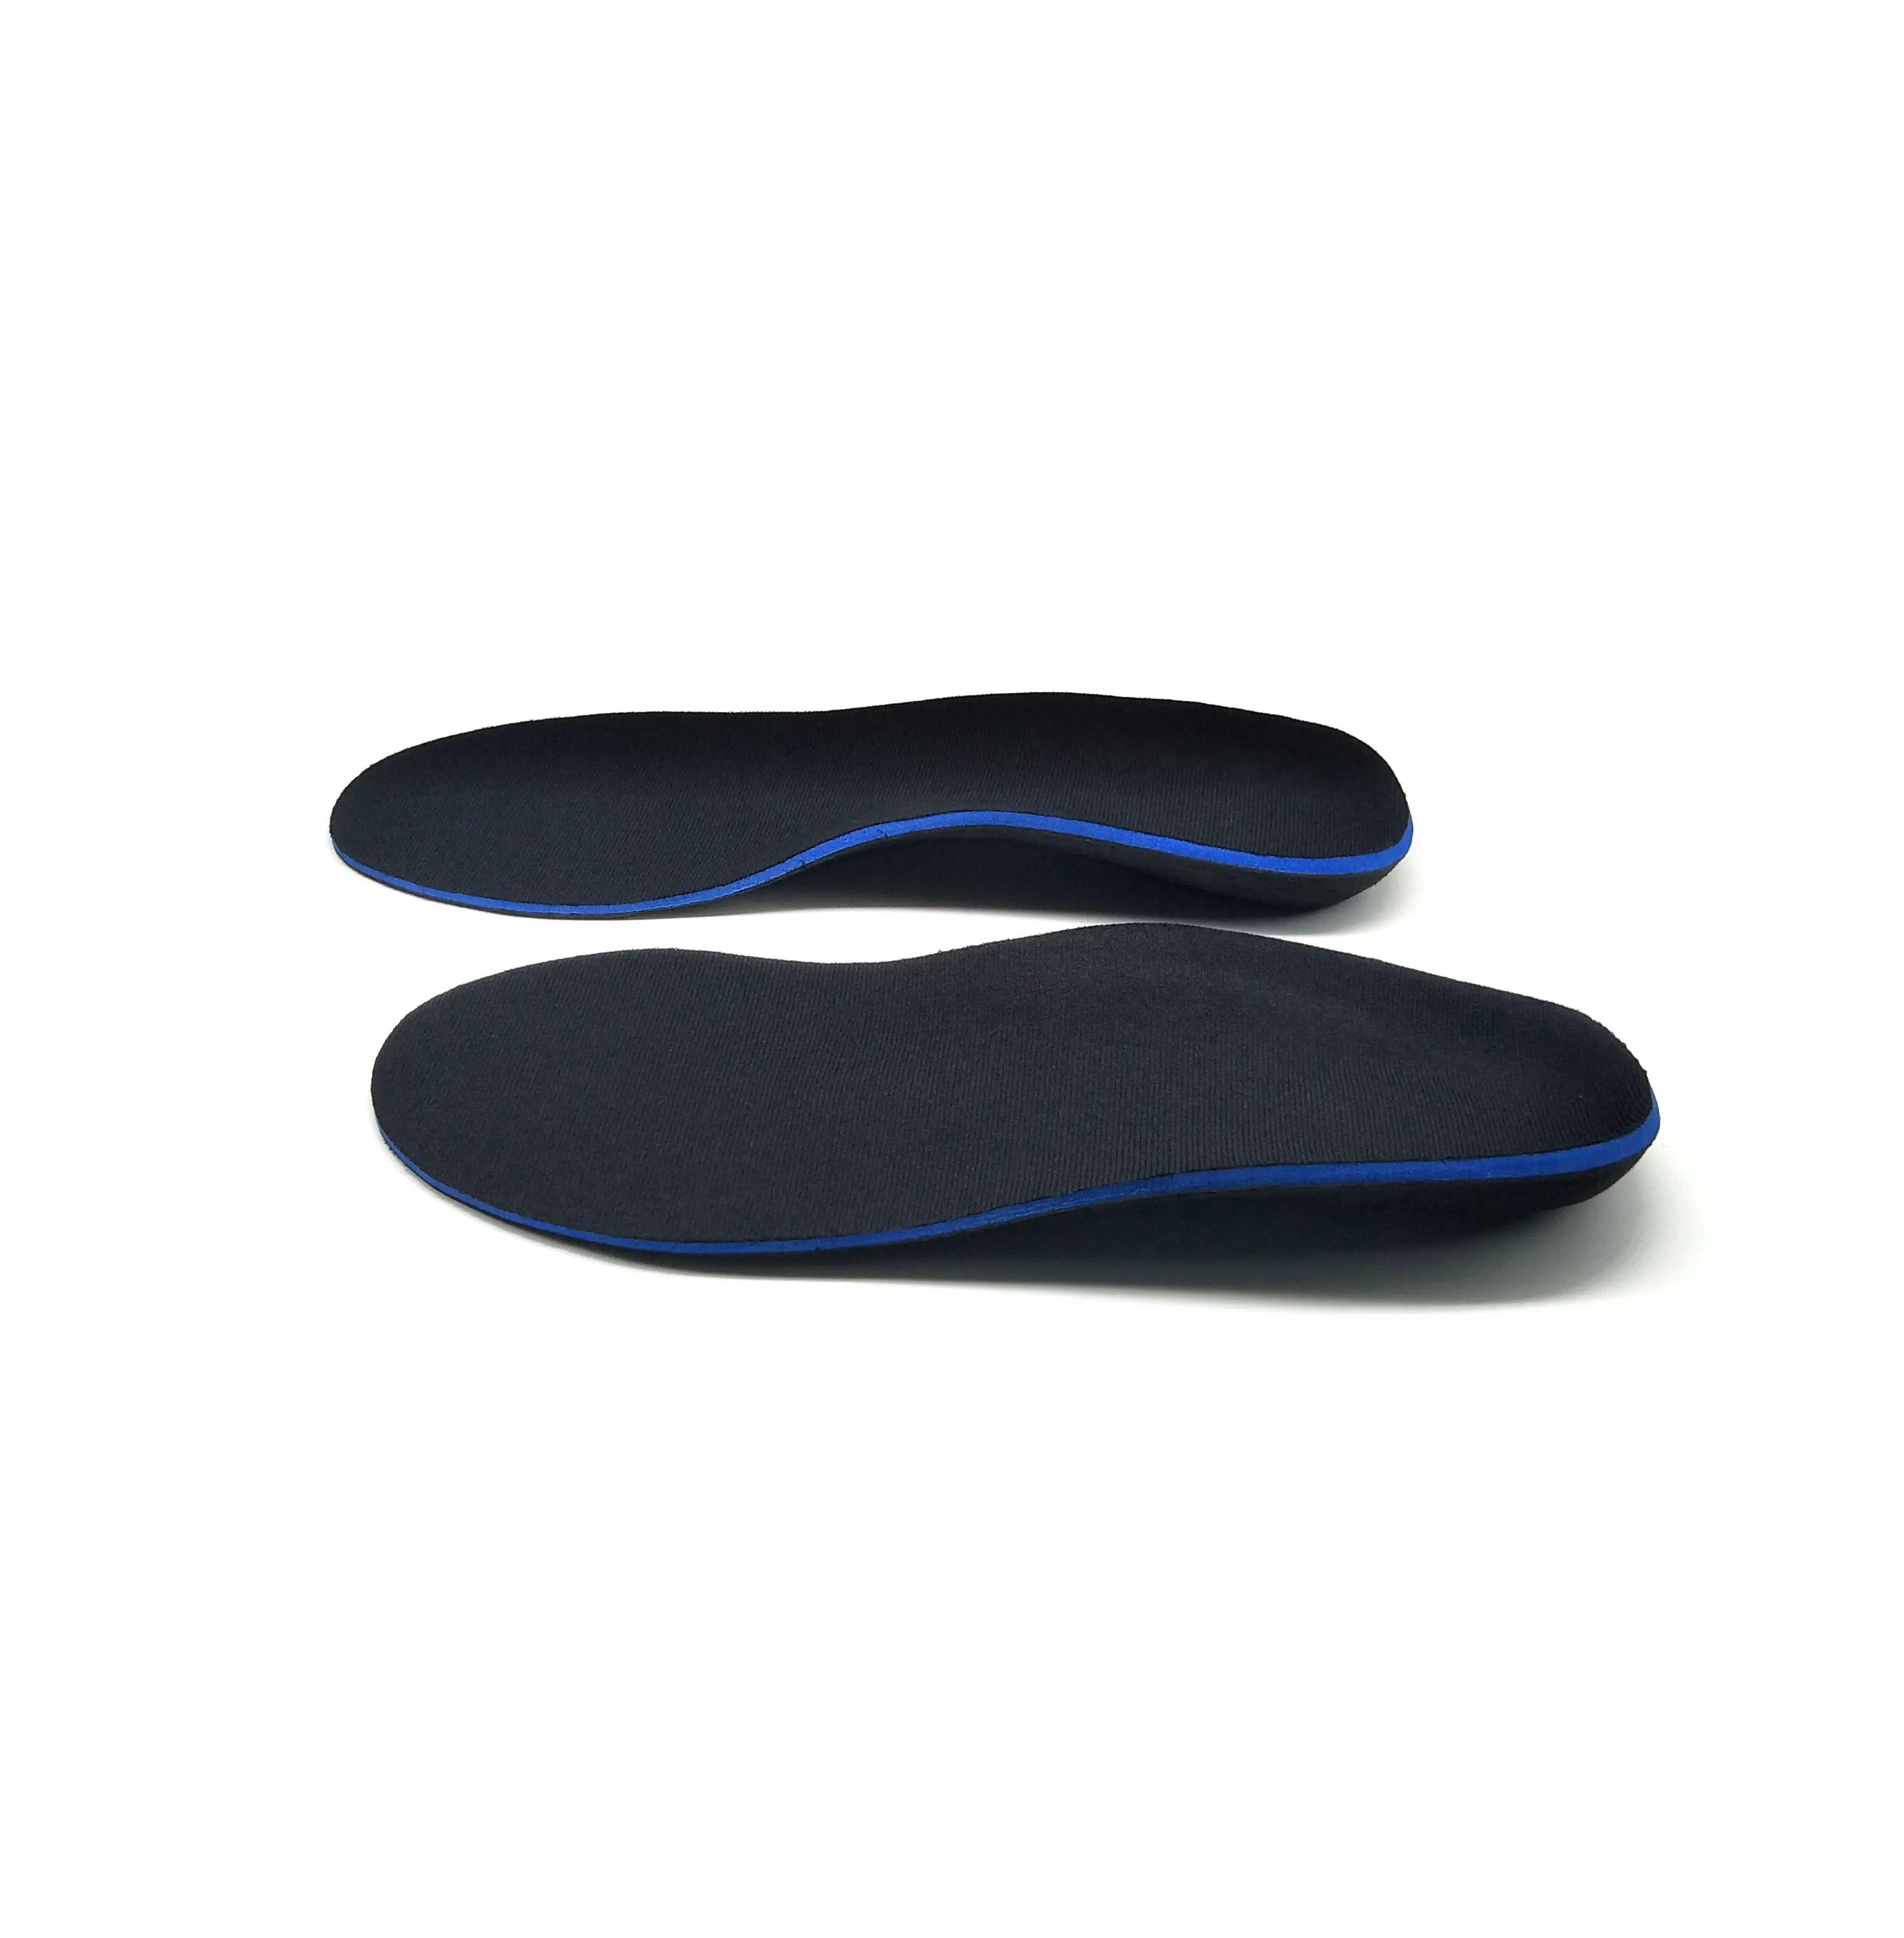 उच्च गुणवत्ता ईवा भिगोना फ्लैट फीट insoles ओर्थोटिक आर्क समर्थन आर्थोपेडिक धान खेल जूते Insoles जूता आवेषण SI01C